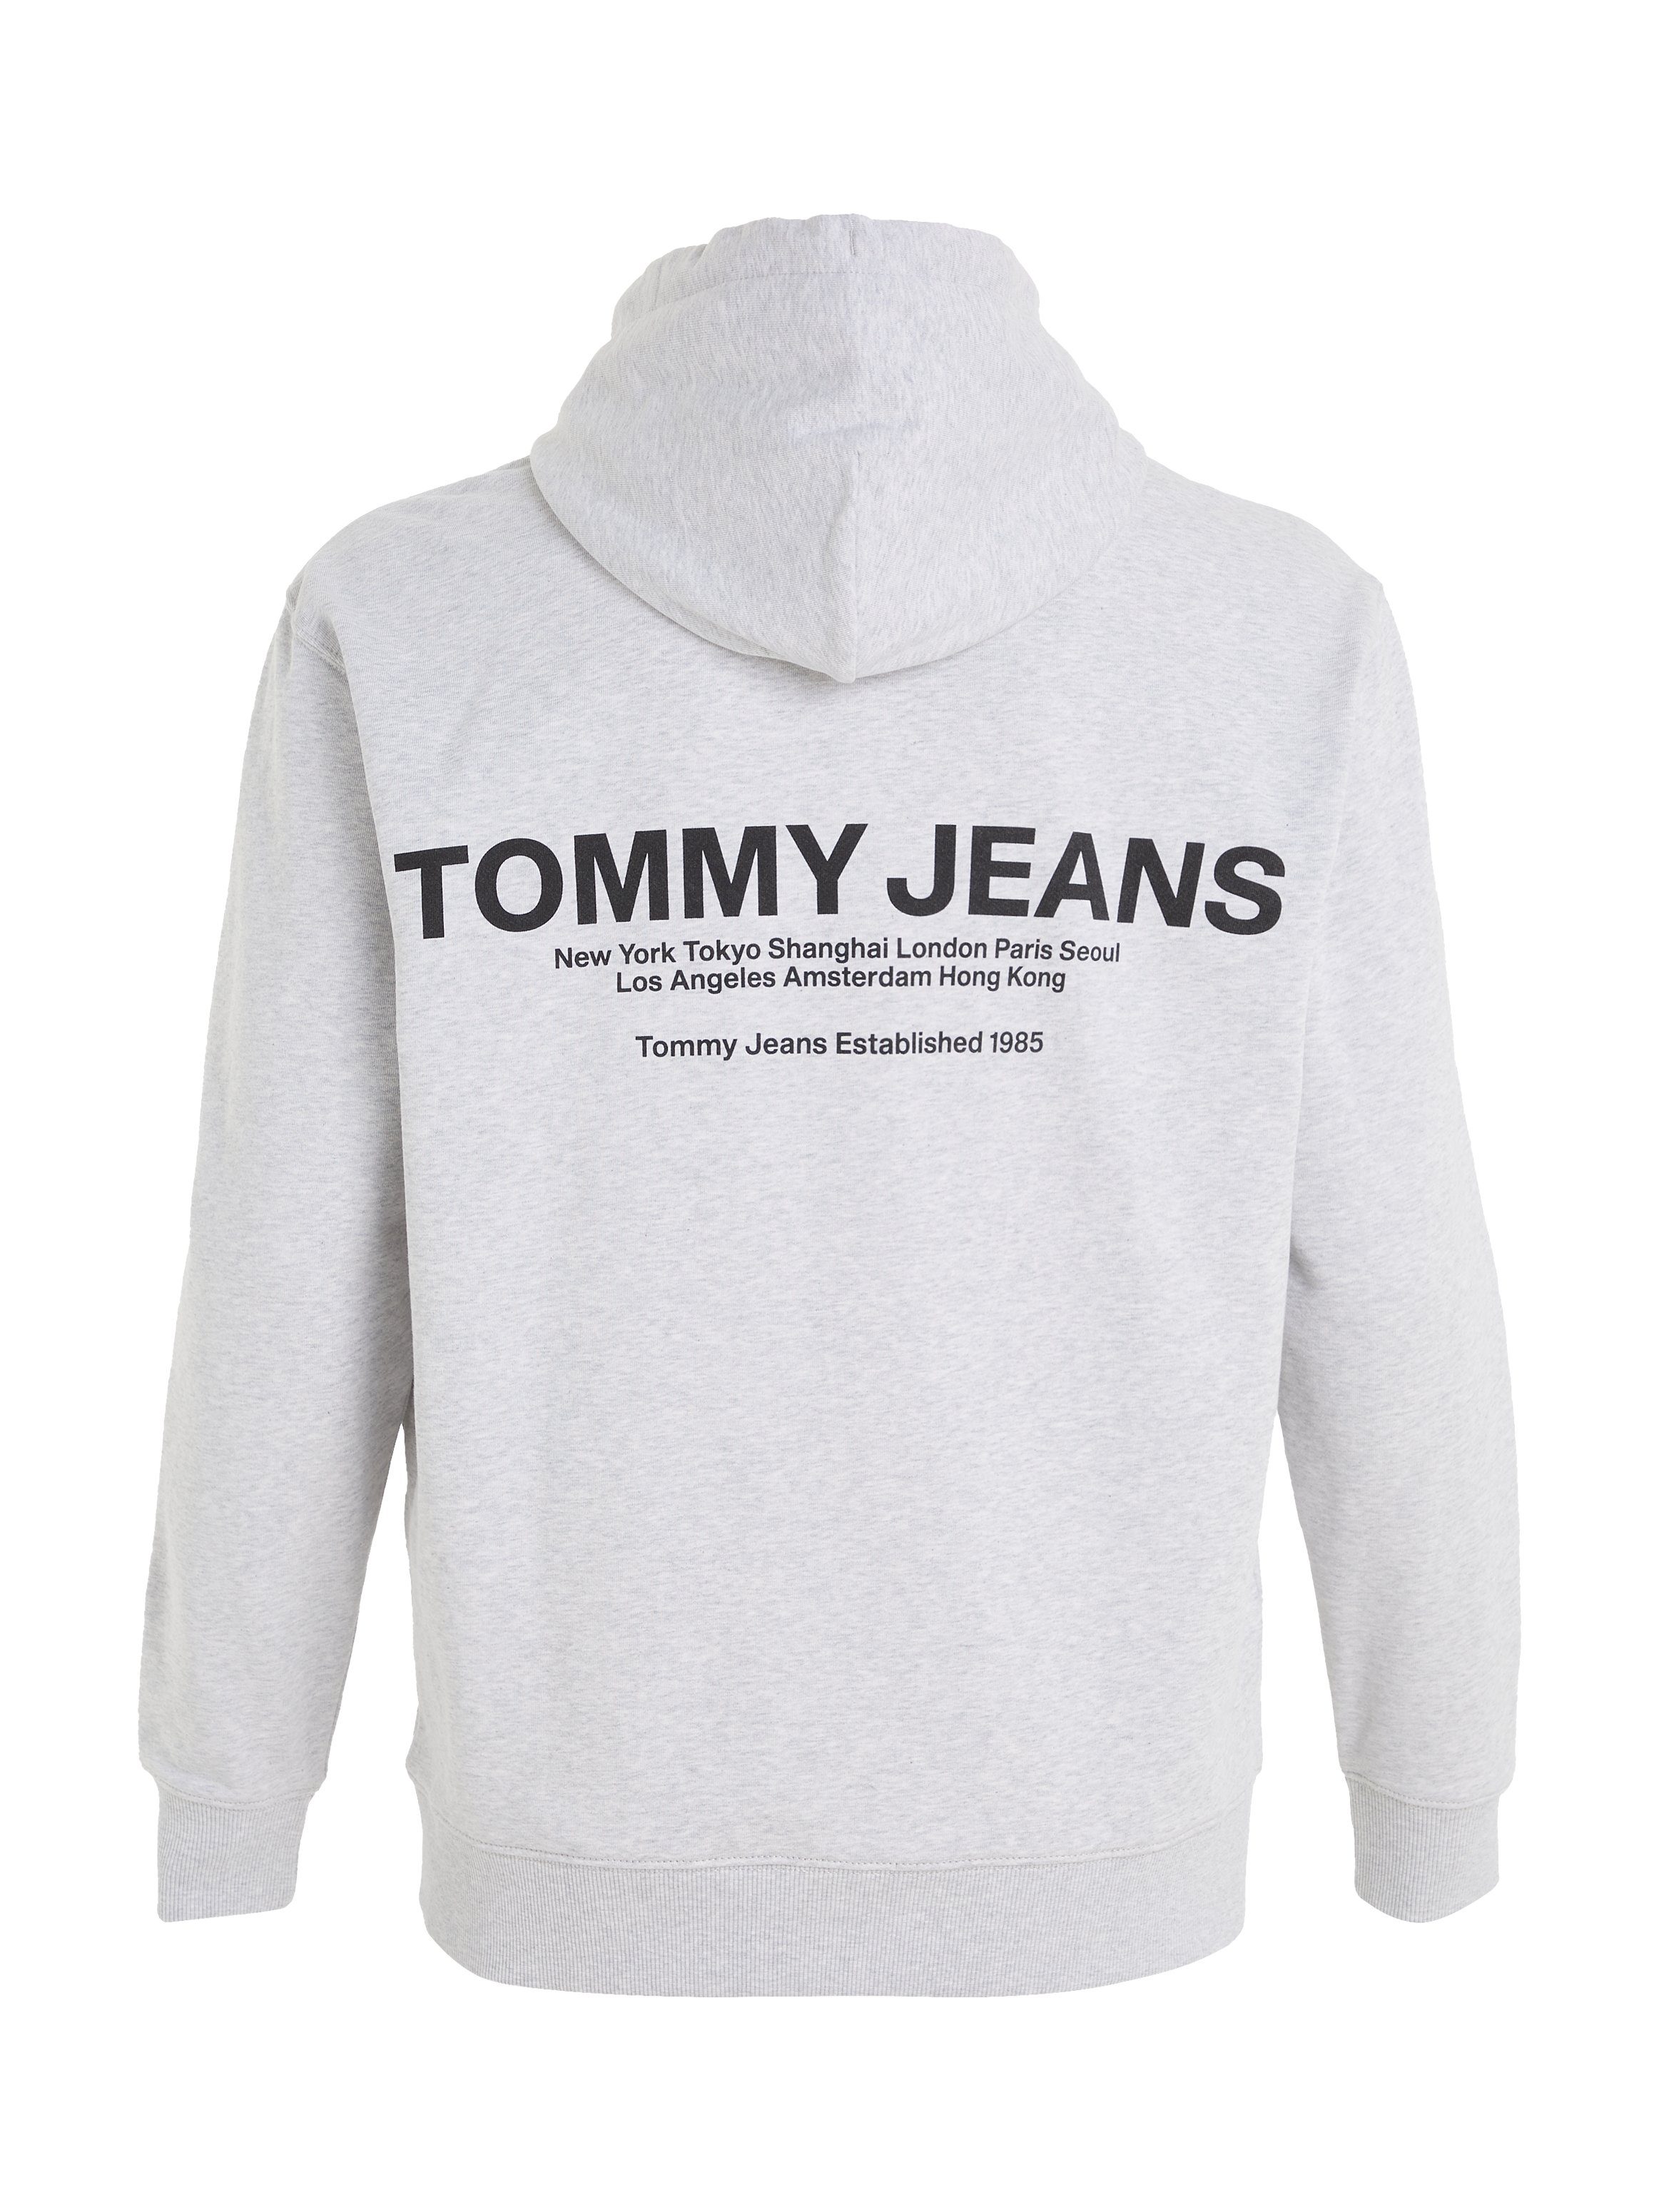 PLUS Jeans HOOD Plus Htr ENTRY Hoodie GRAPHIC Tommy TJM Grey Silver REG